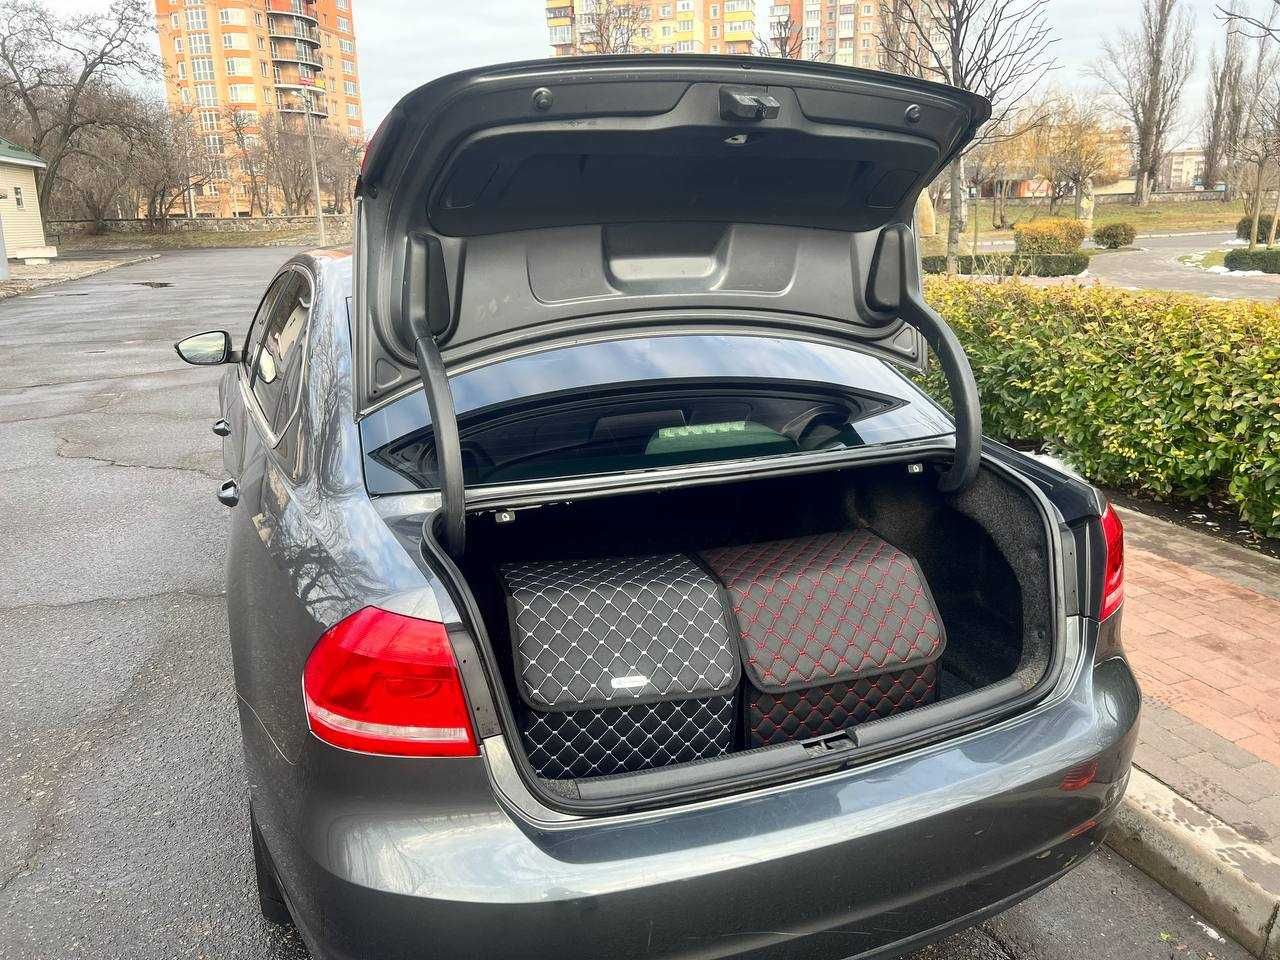 Органайзер/сумка в багажник авто